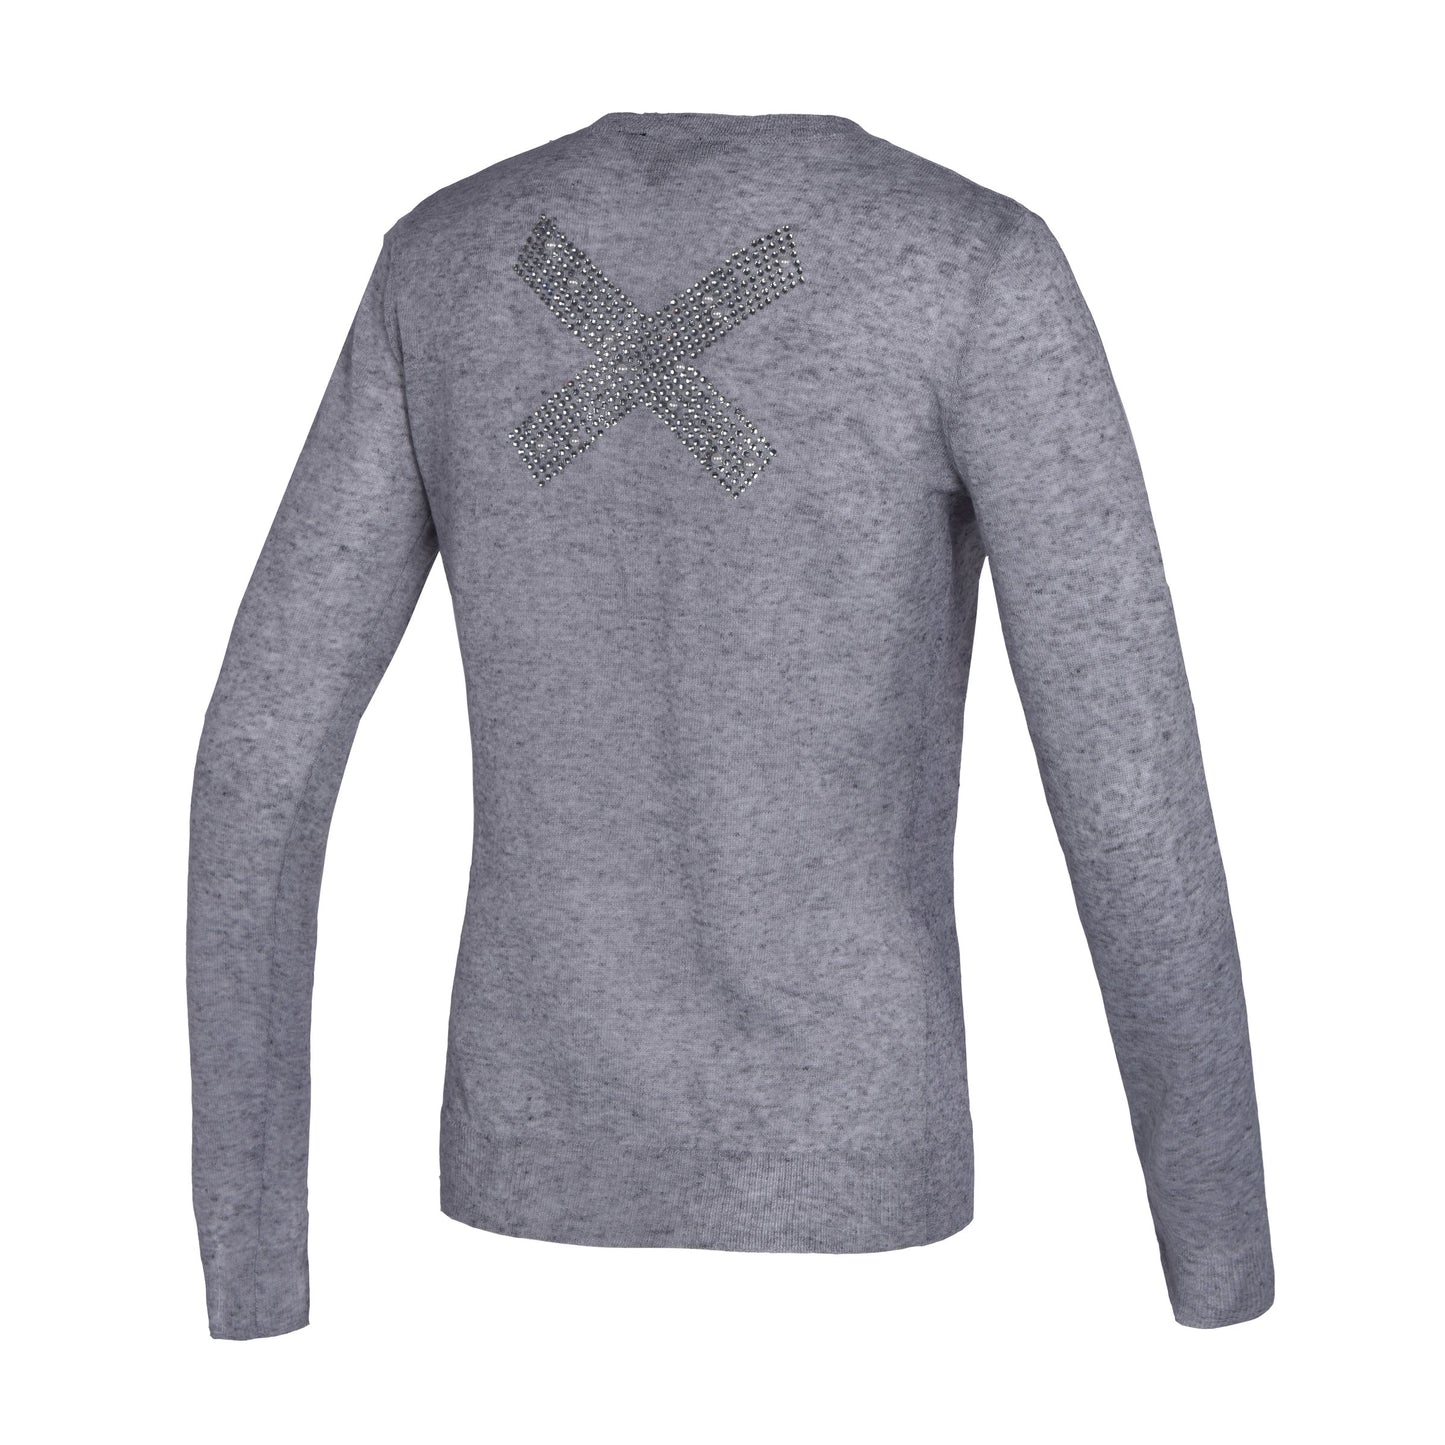 Kingsland Polodi Sweater - Grey - Size S